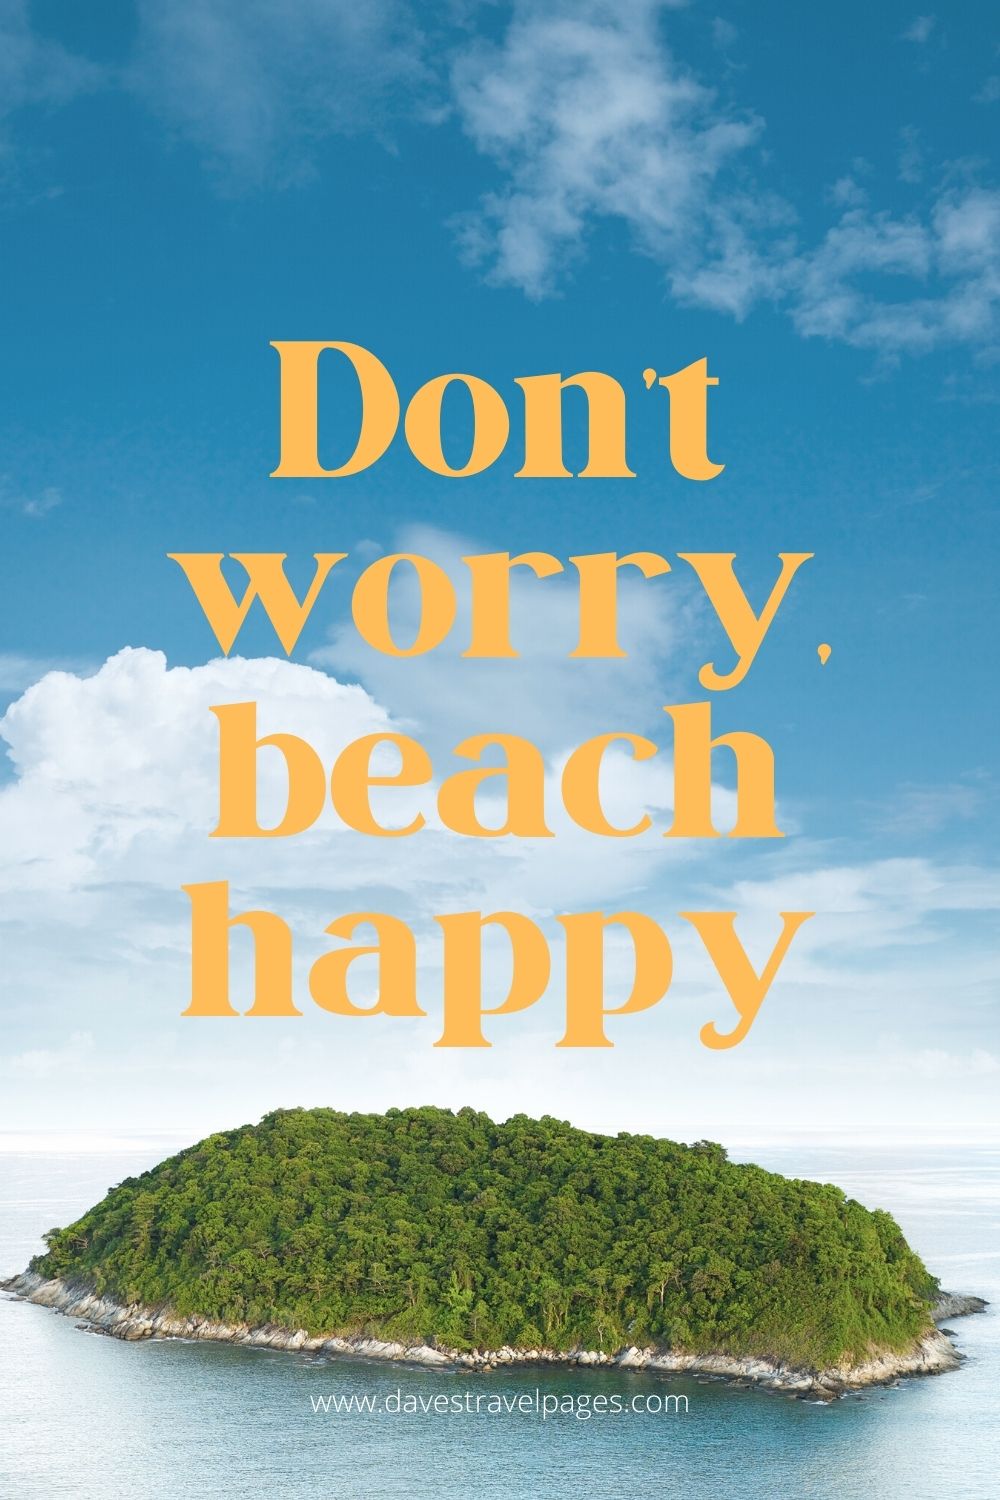 Don't worry, beach happy island instagram captions